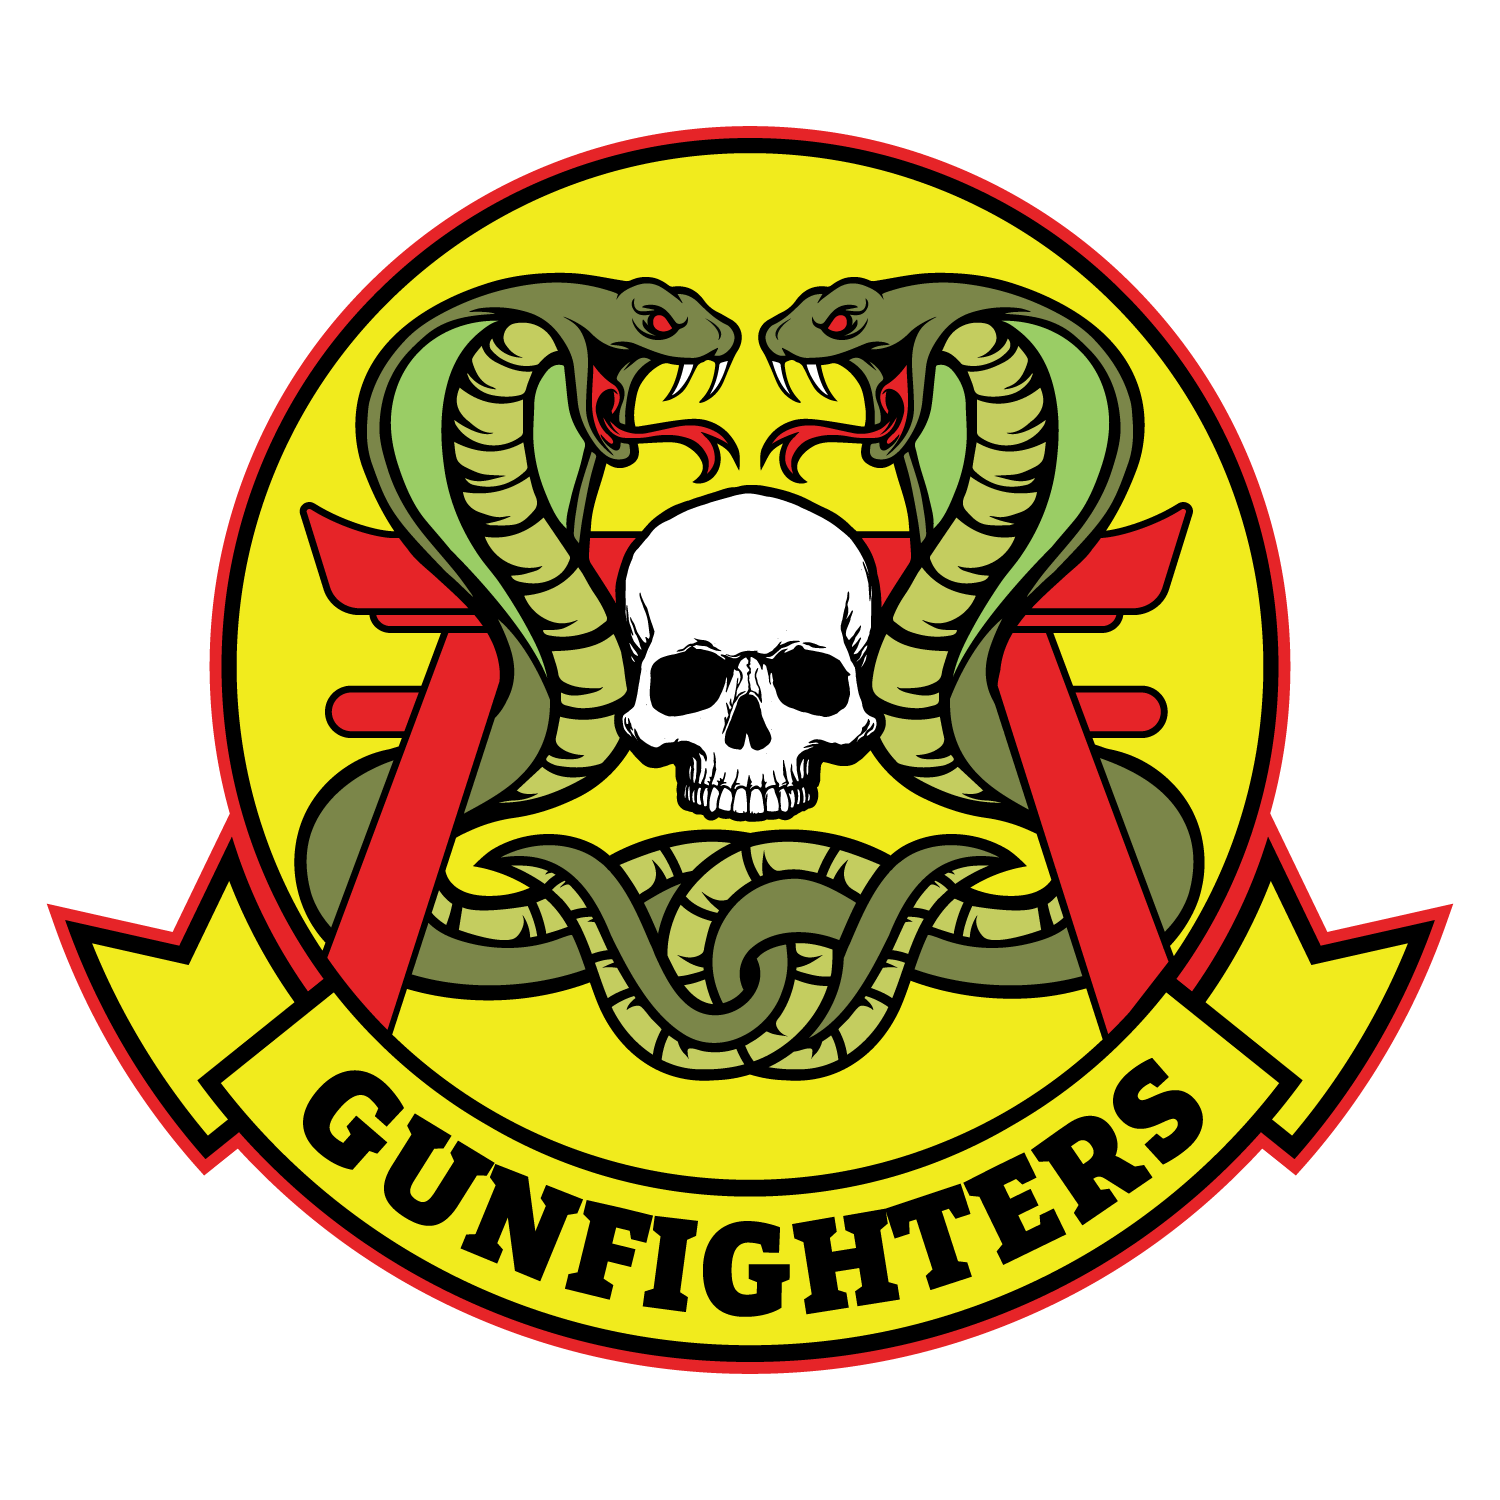 HMLA 369 "Gunfighters"